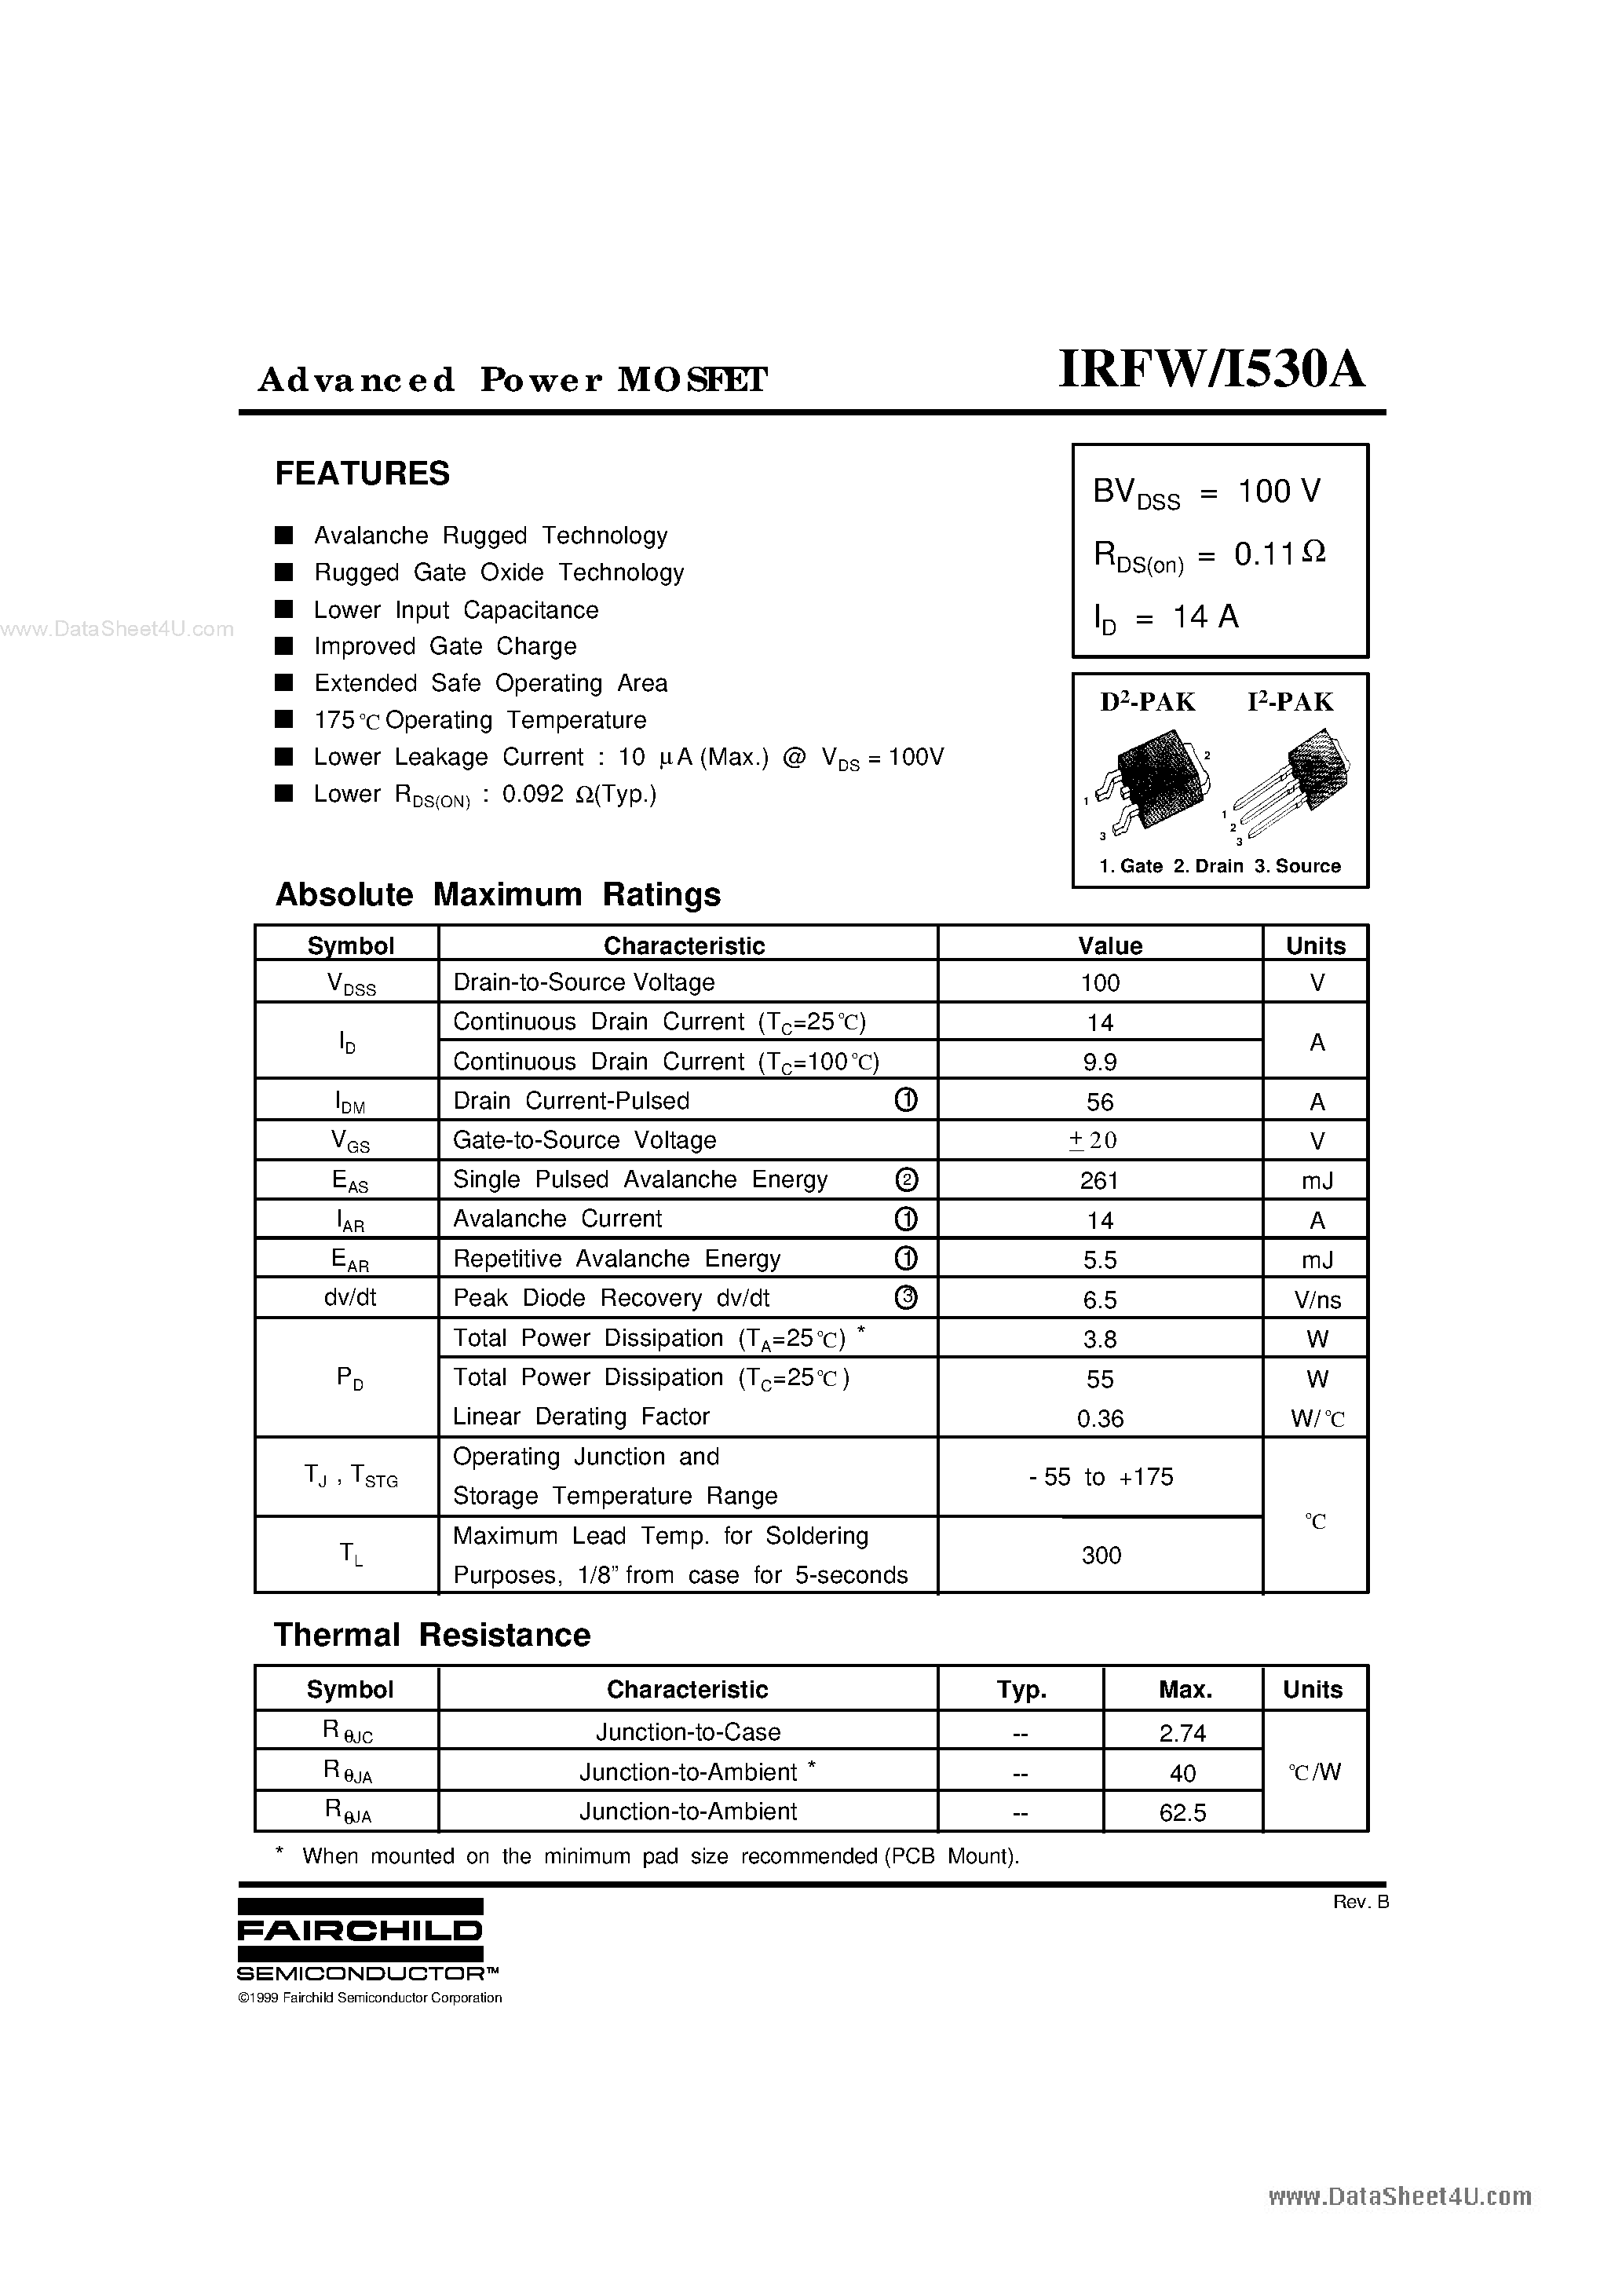 Даташит IRFI530A - Advanced Power MOSFET страница 1